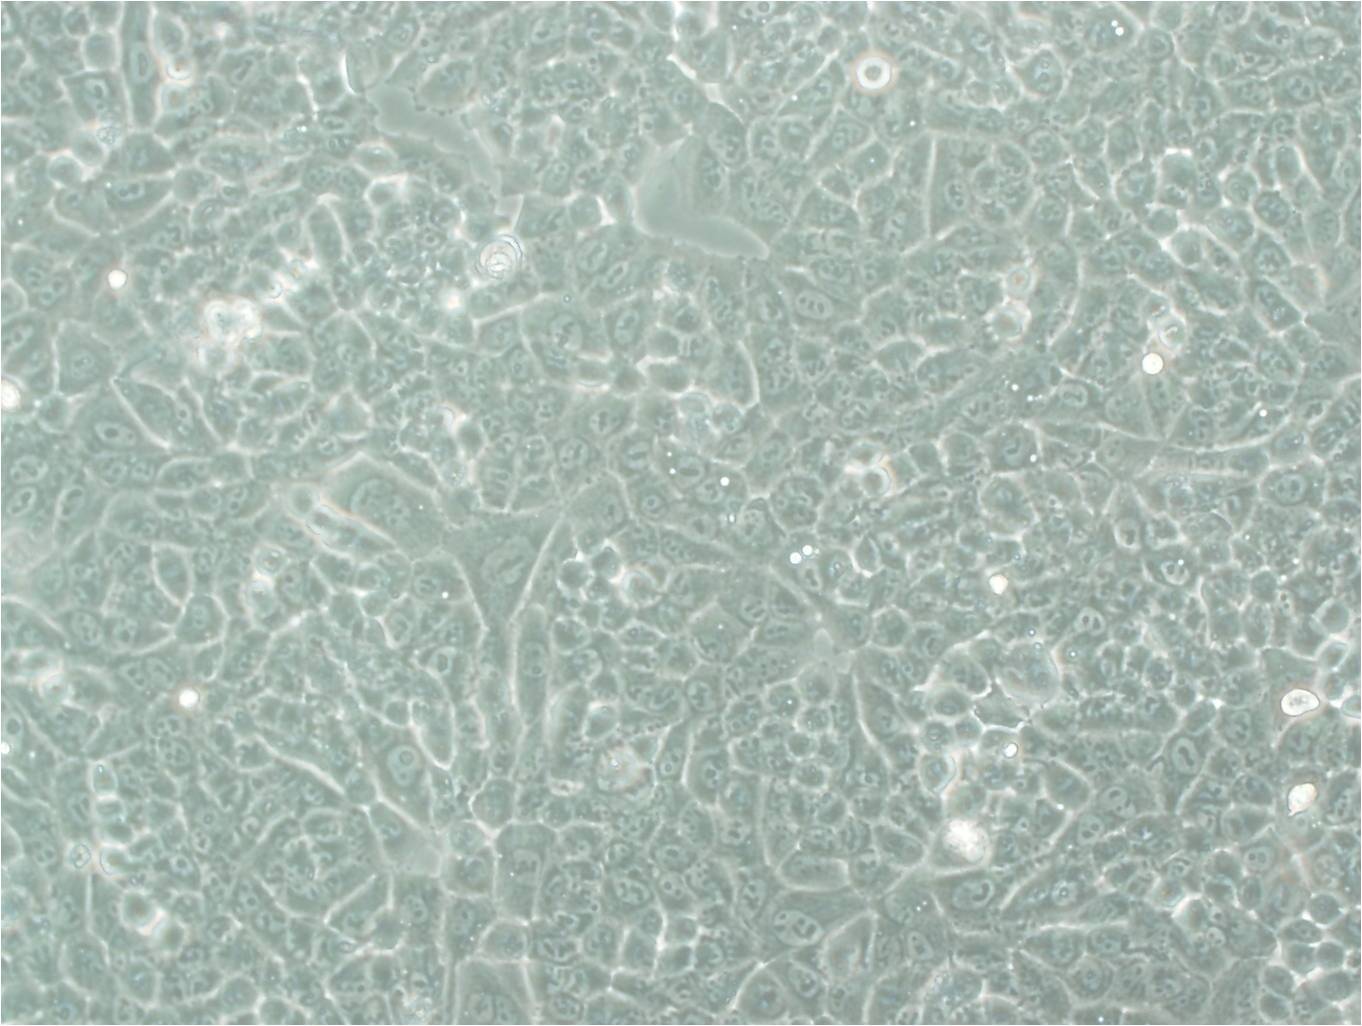 MOVAS-1 Cells|小鼠主动脉平滑肌可传代细胞系